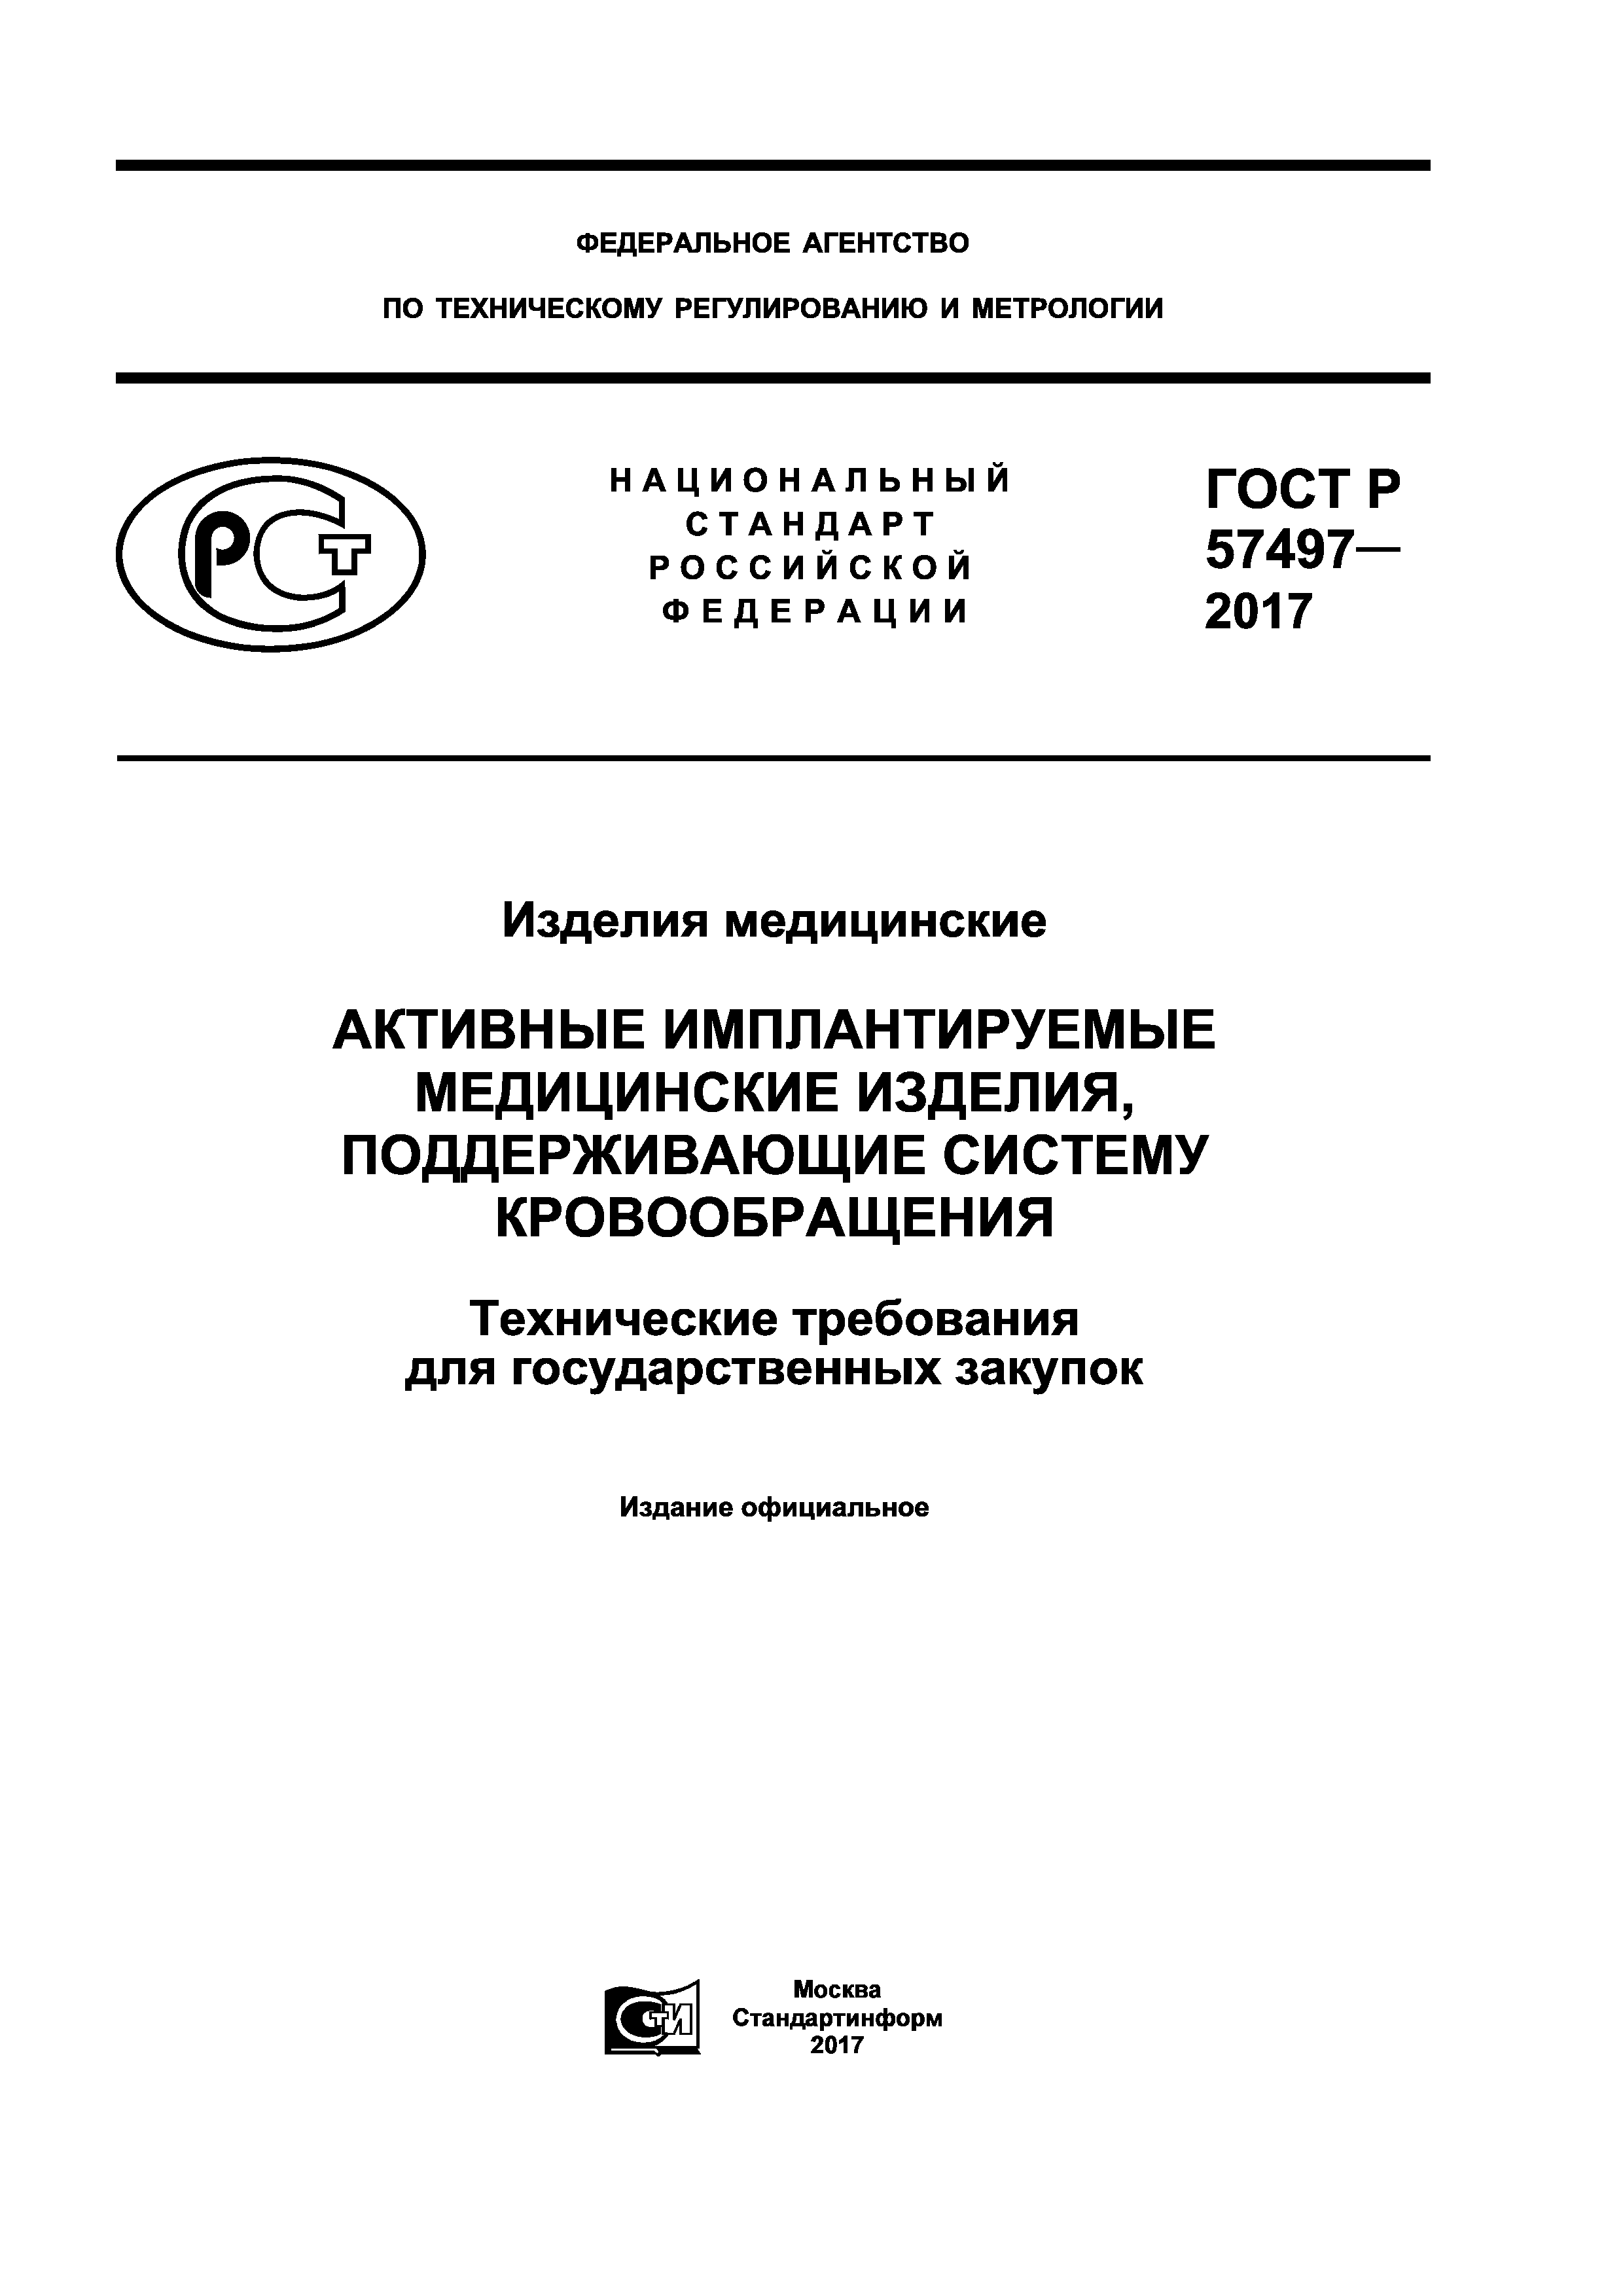 ГОСТ Р 57497-2017